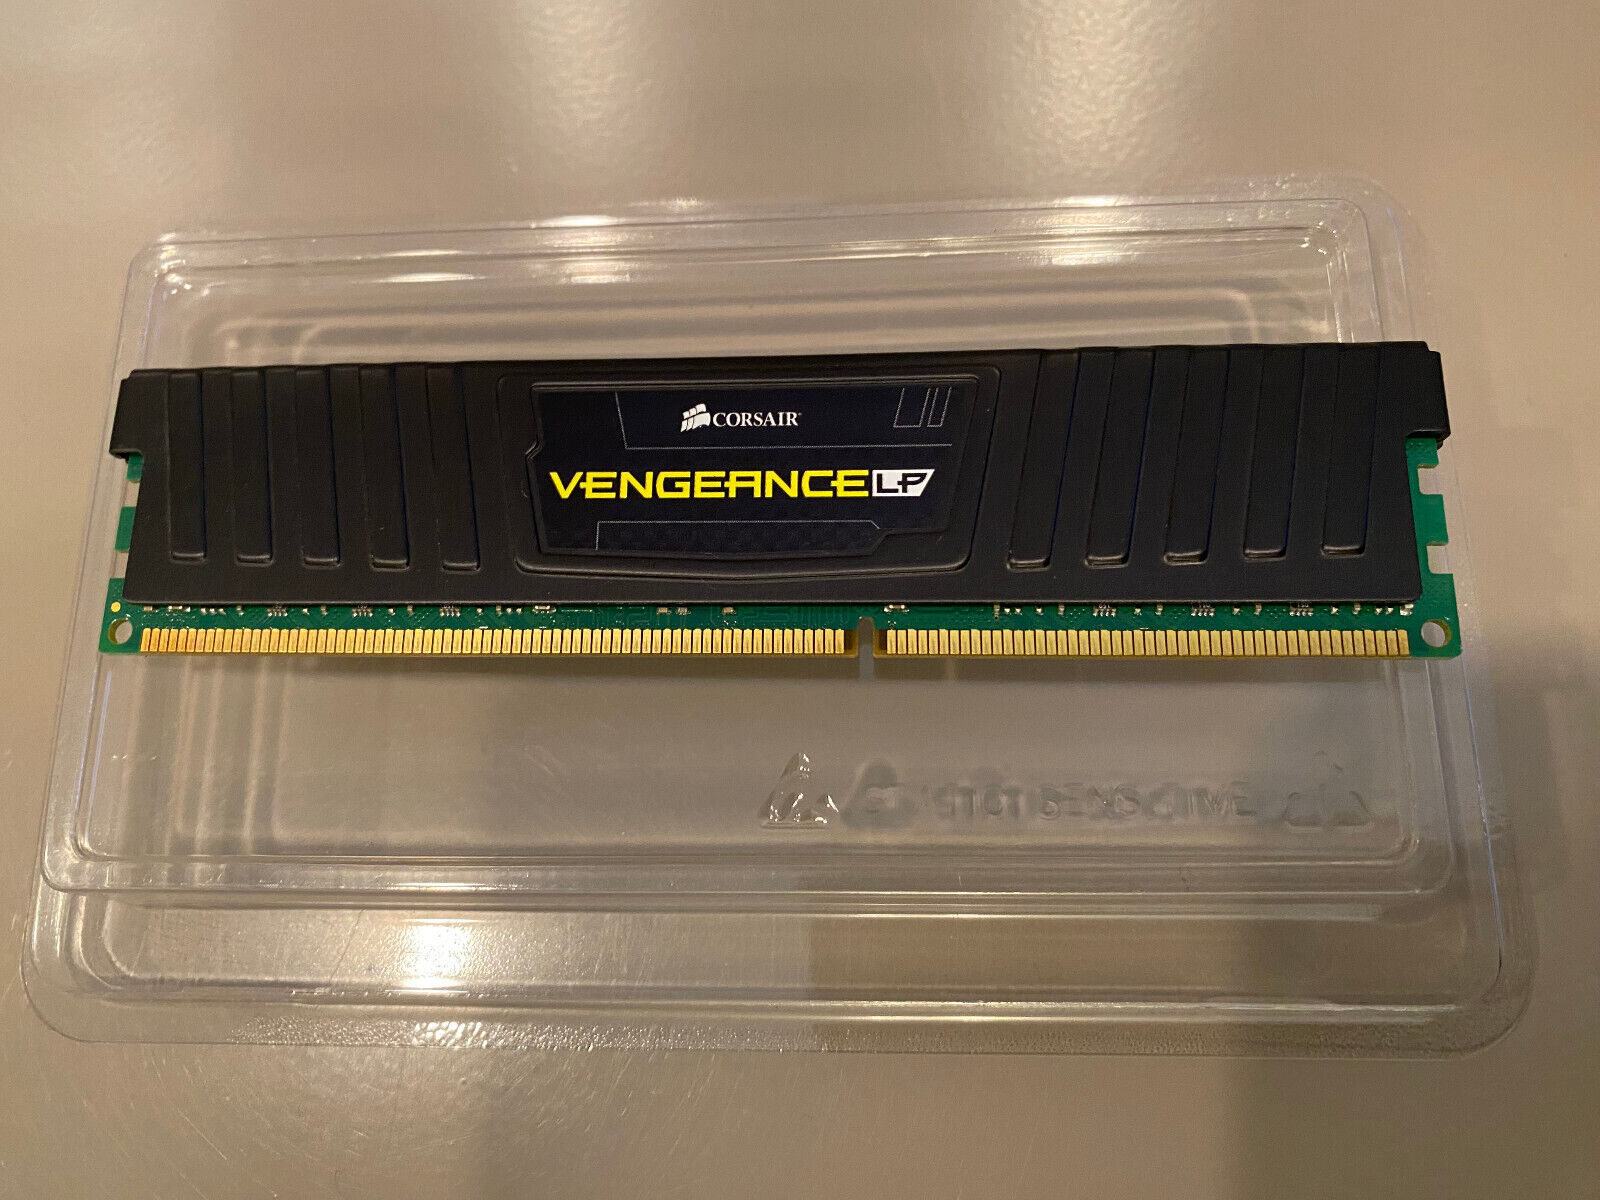 Corsair Vengeance LP 32 GB (8x4GB) PC3-12800 DIMM 1600 MHz DDR3 SDRAM Memory